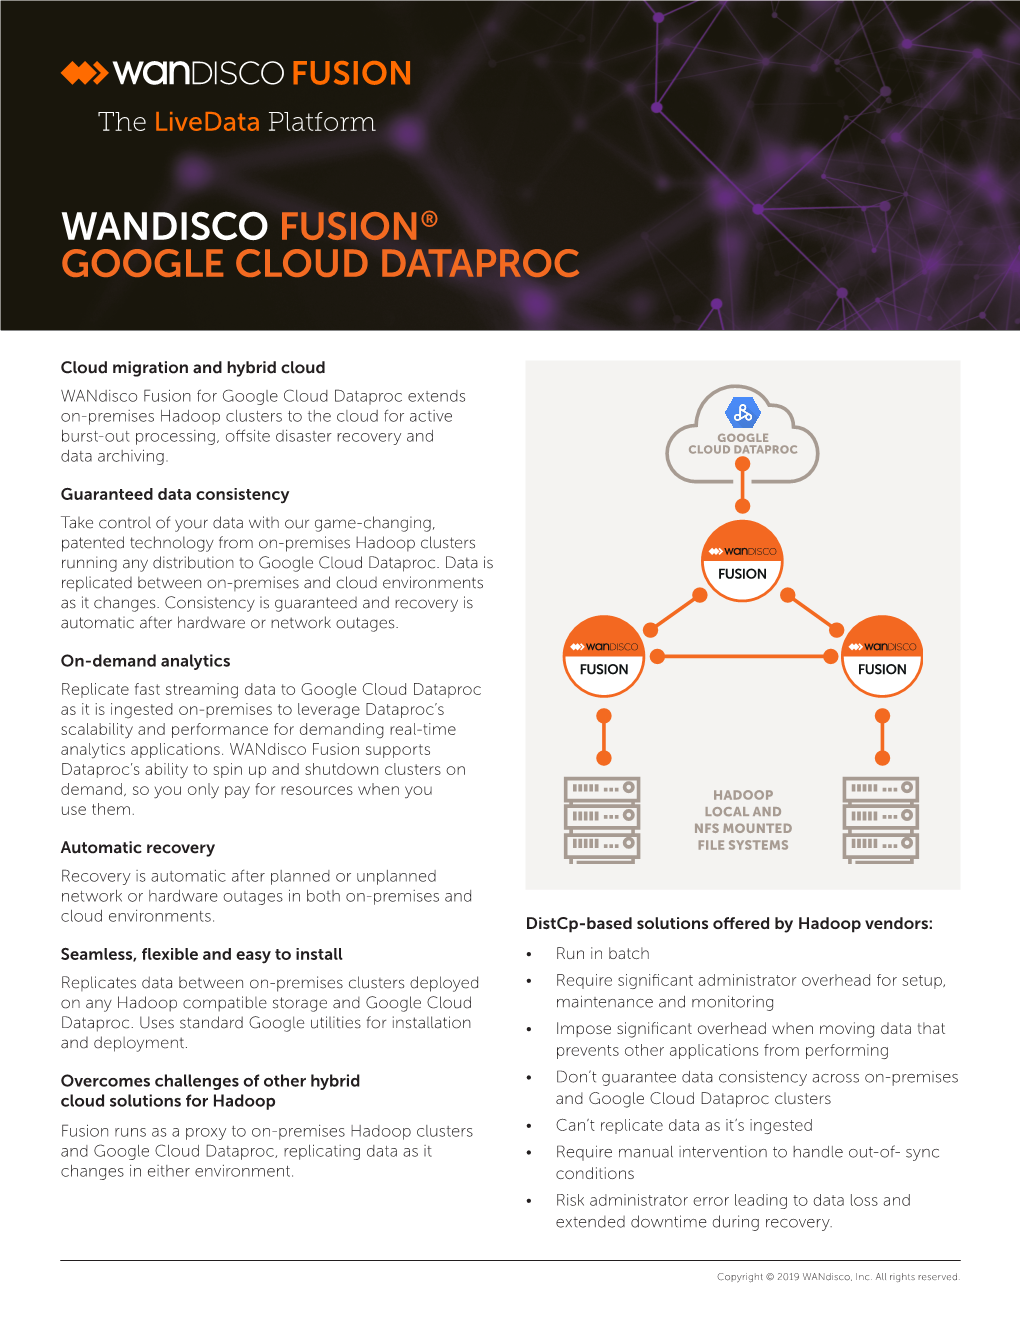 Wandisco Fusion® Google Cloud Dataproc